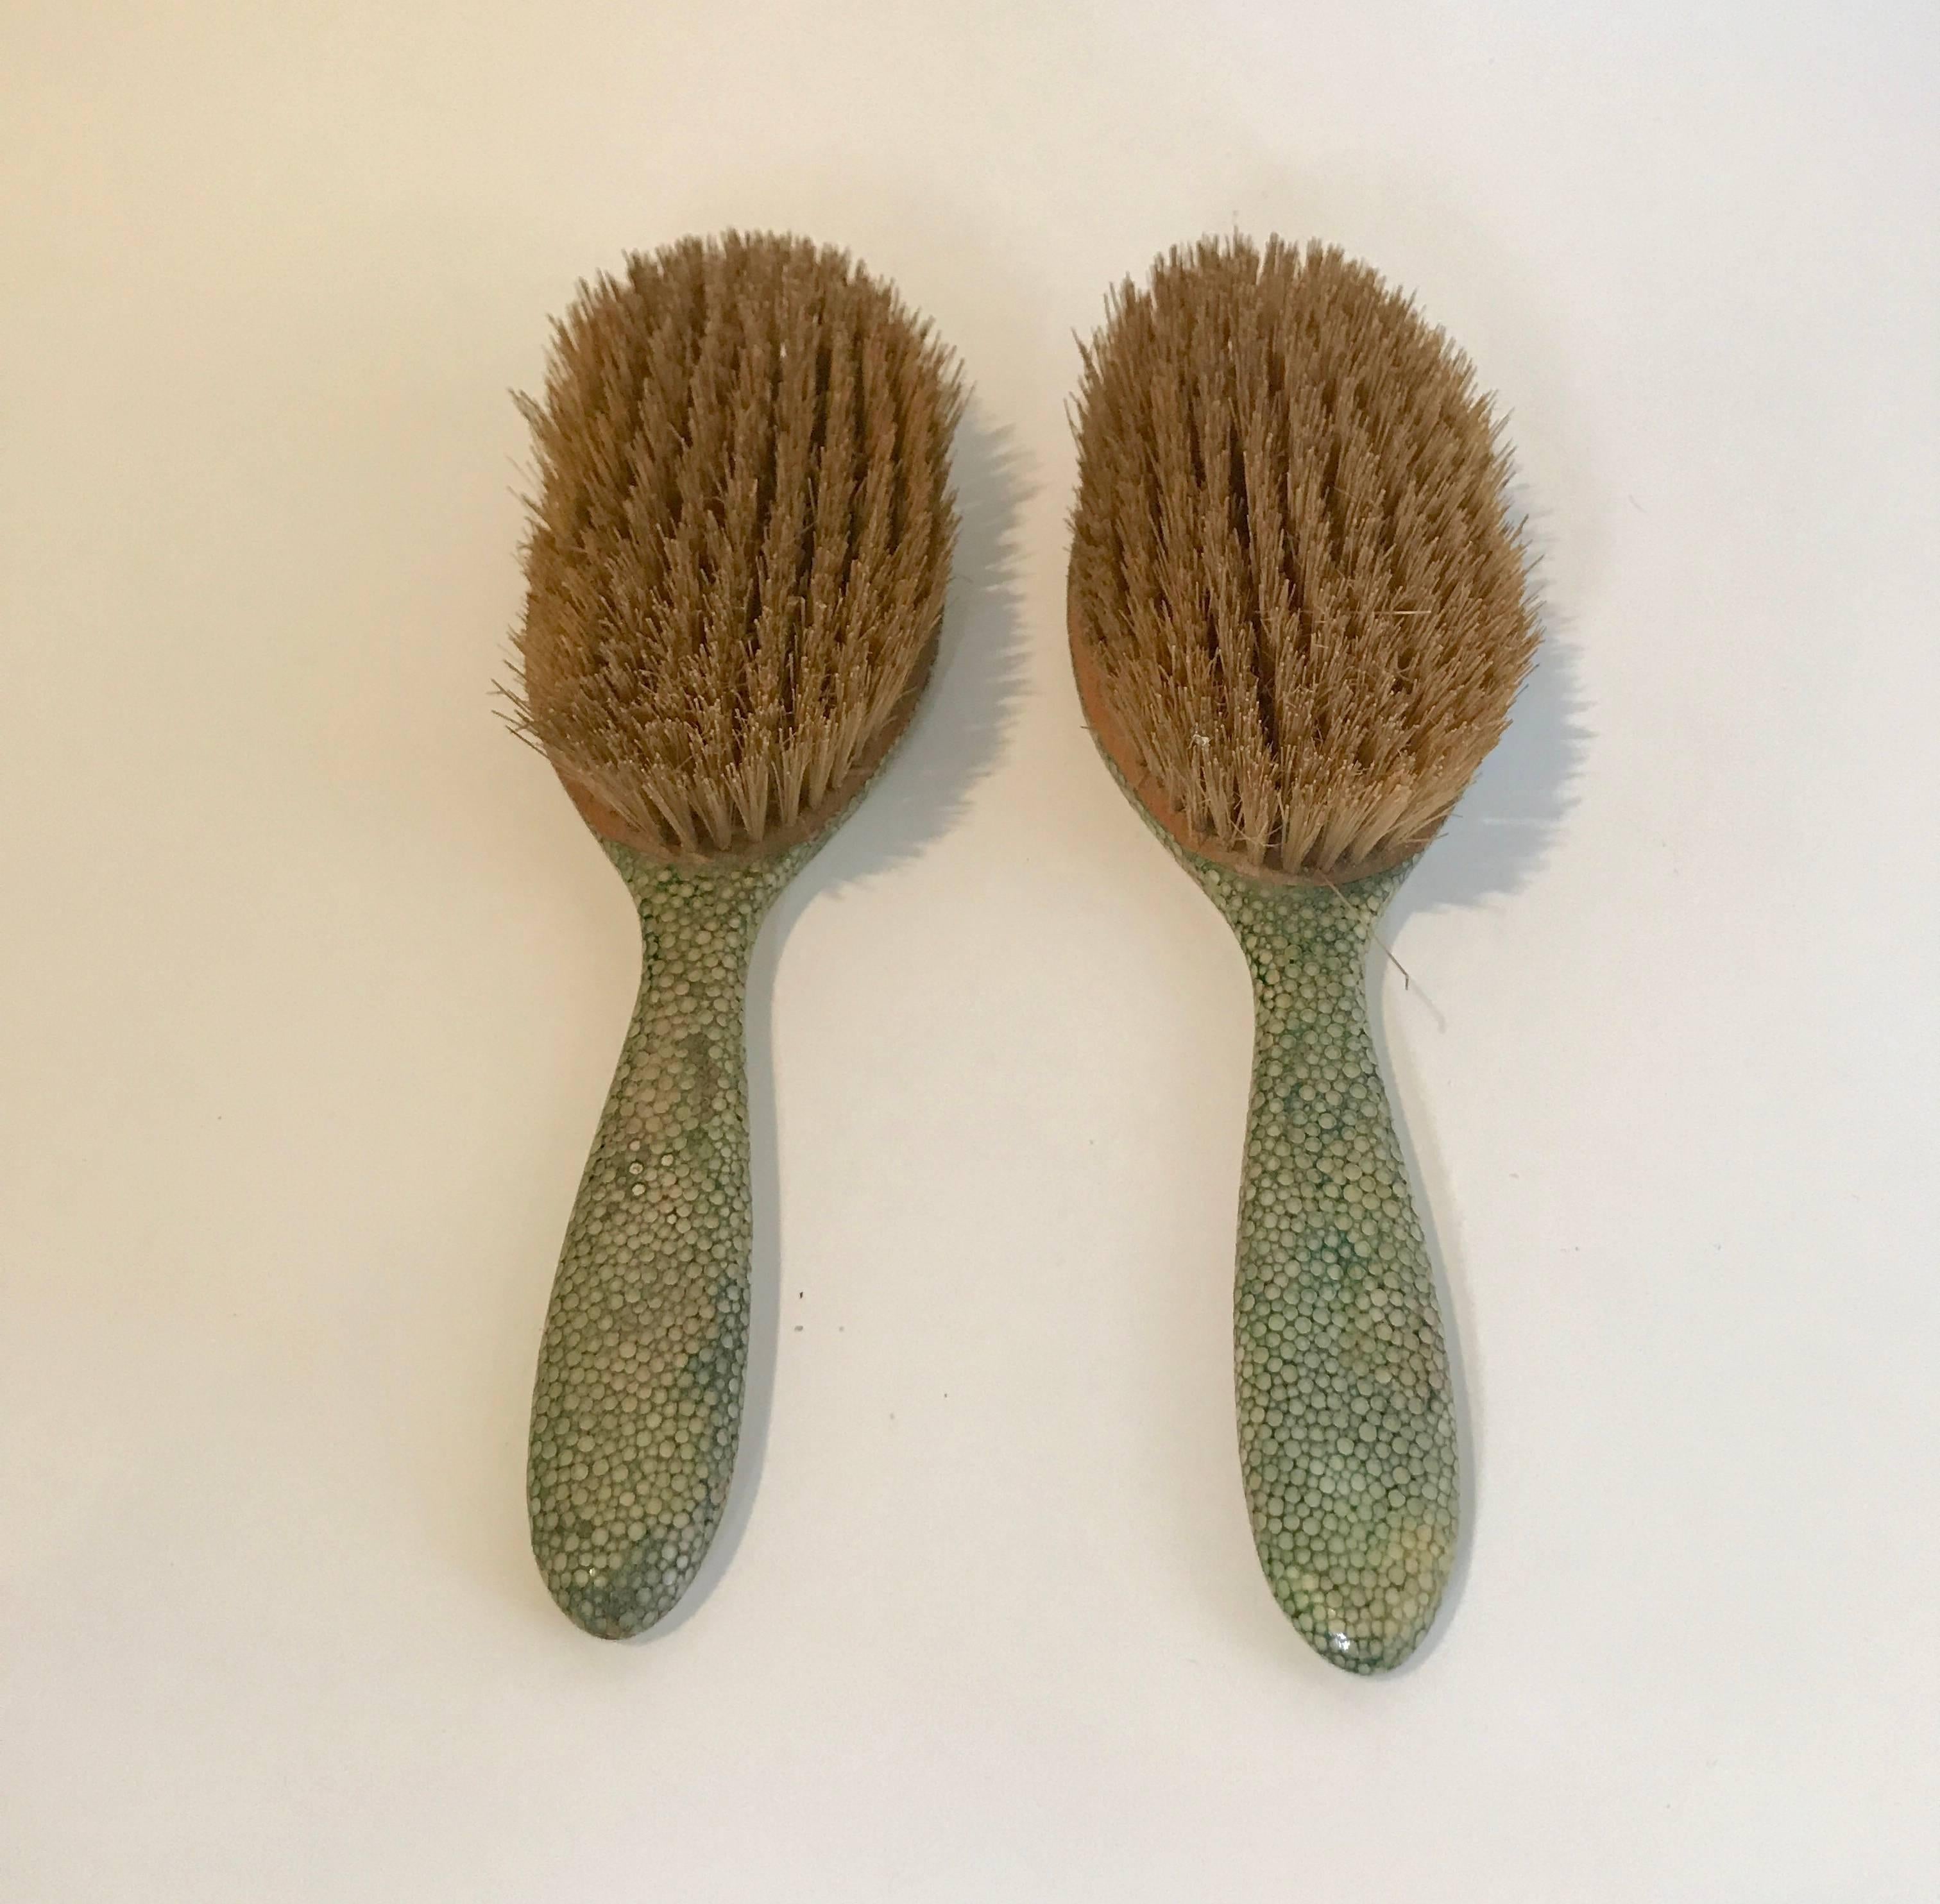 Pair of 18th century shagreen handled hair brushes.